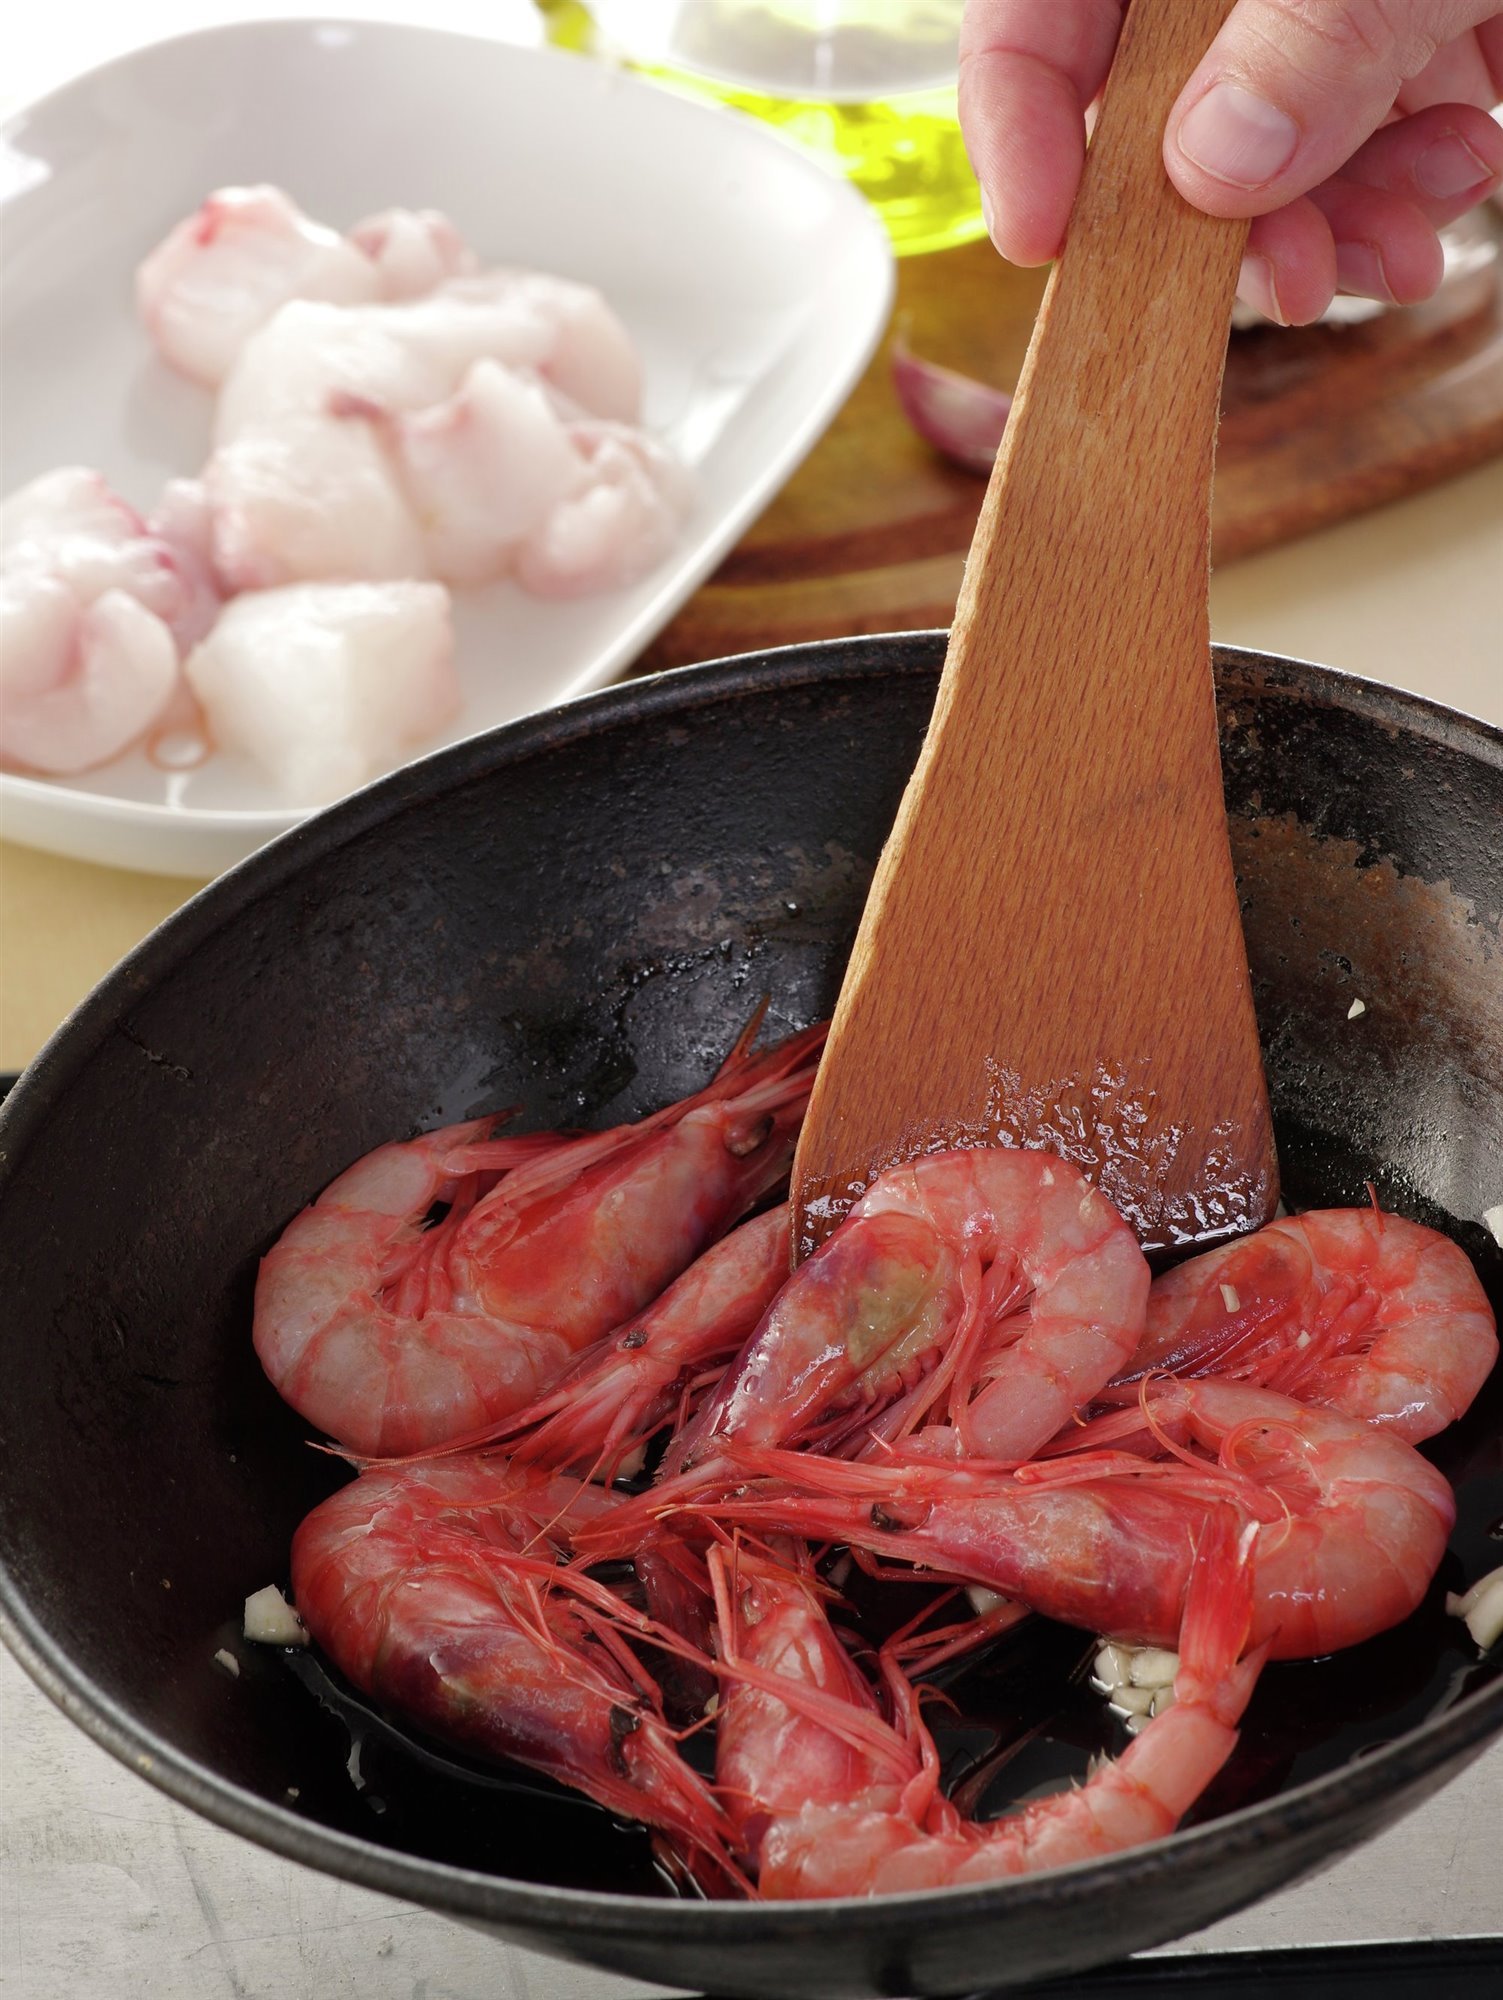 2. Mark the shrimps